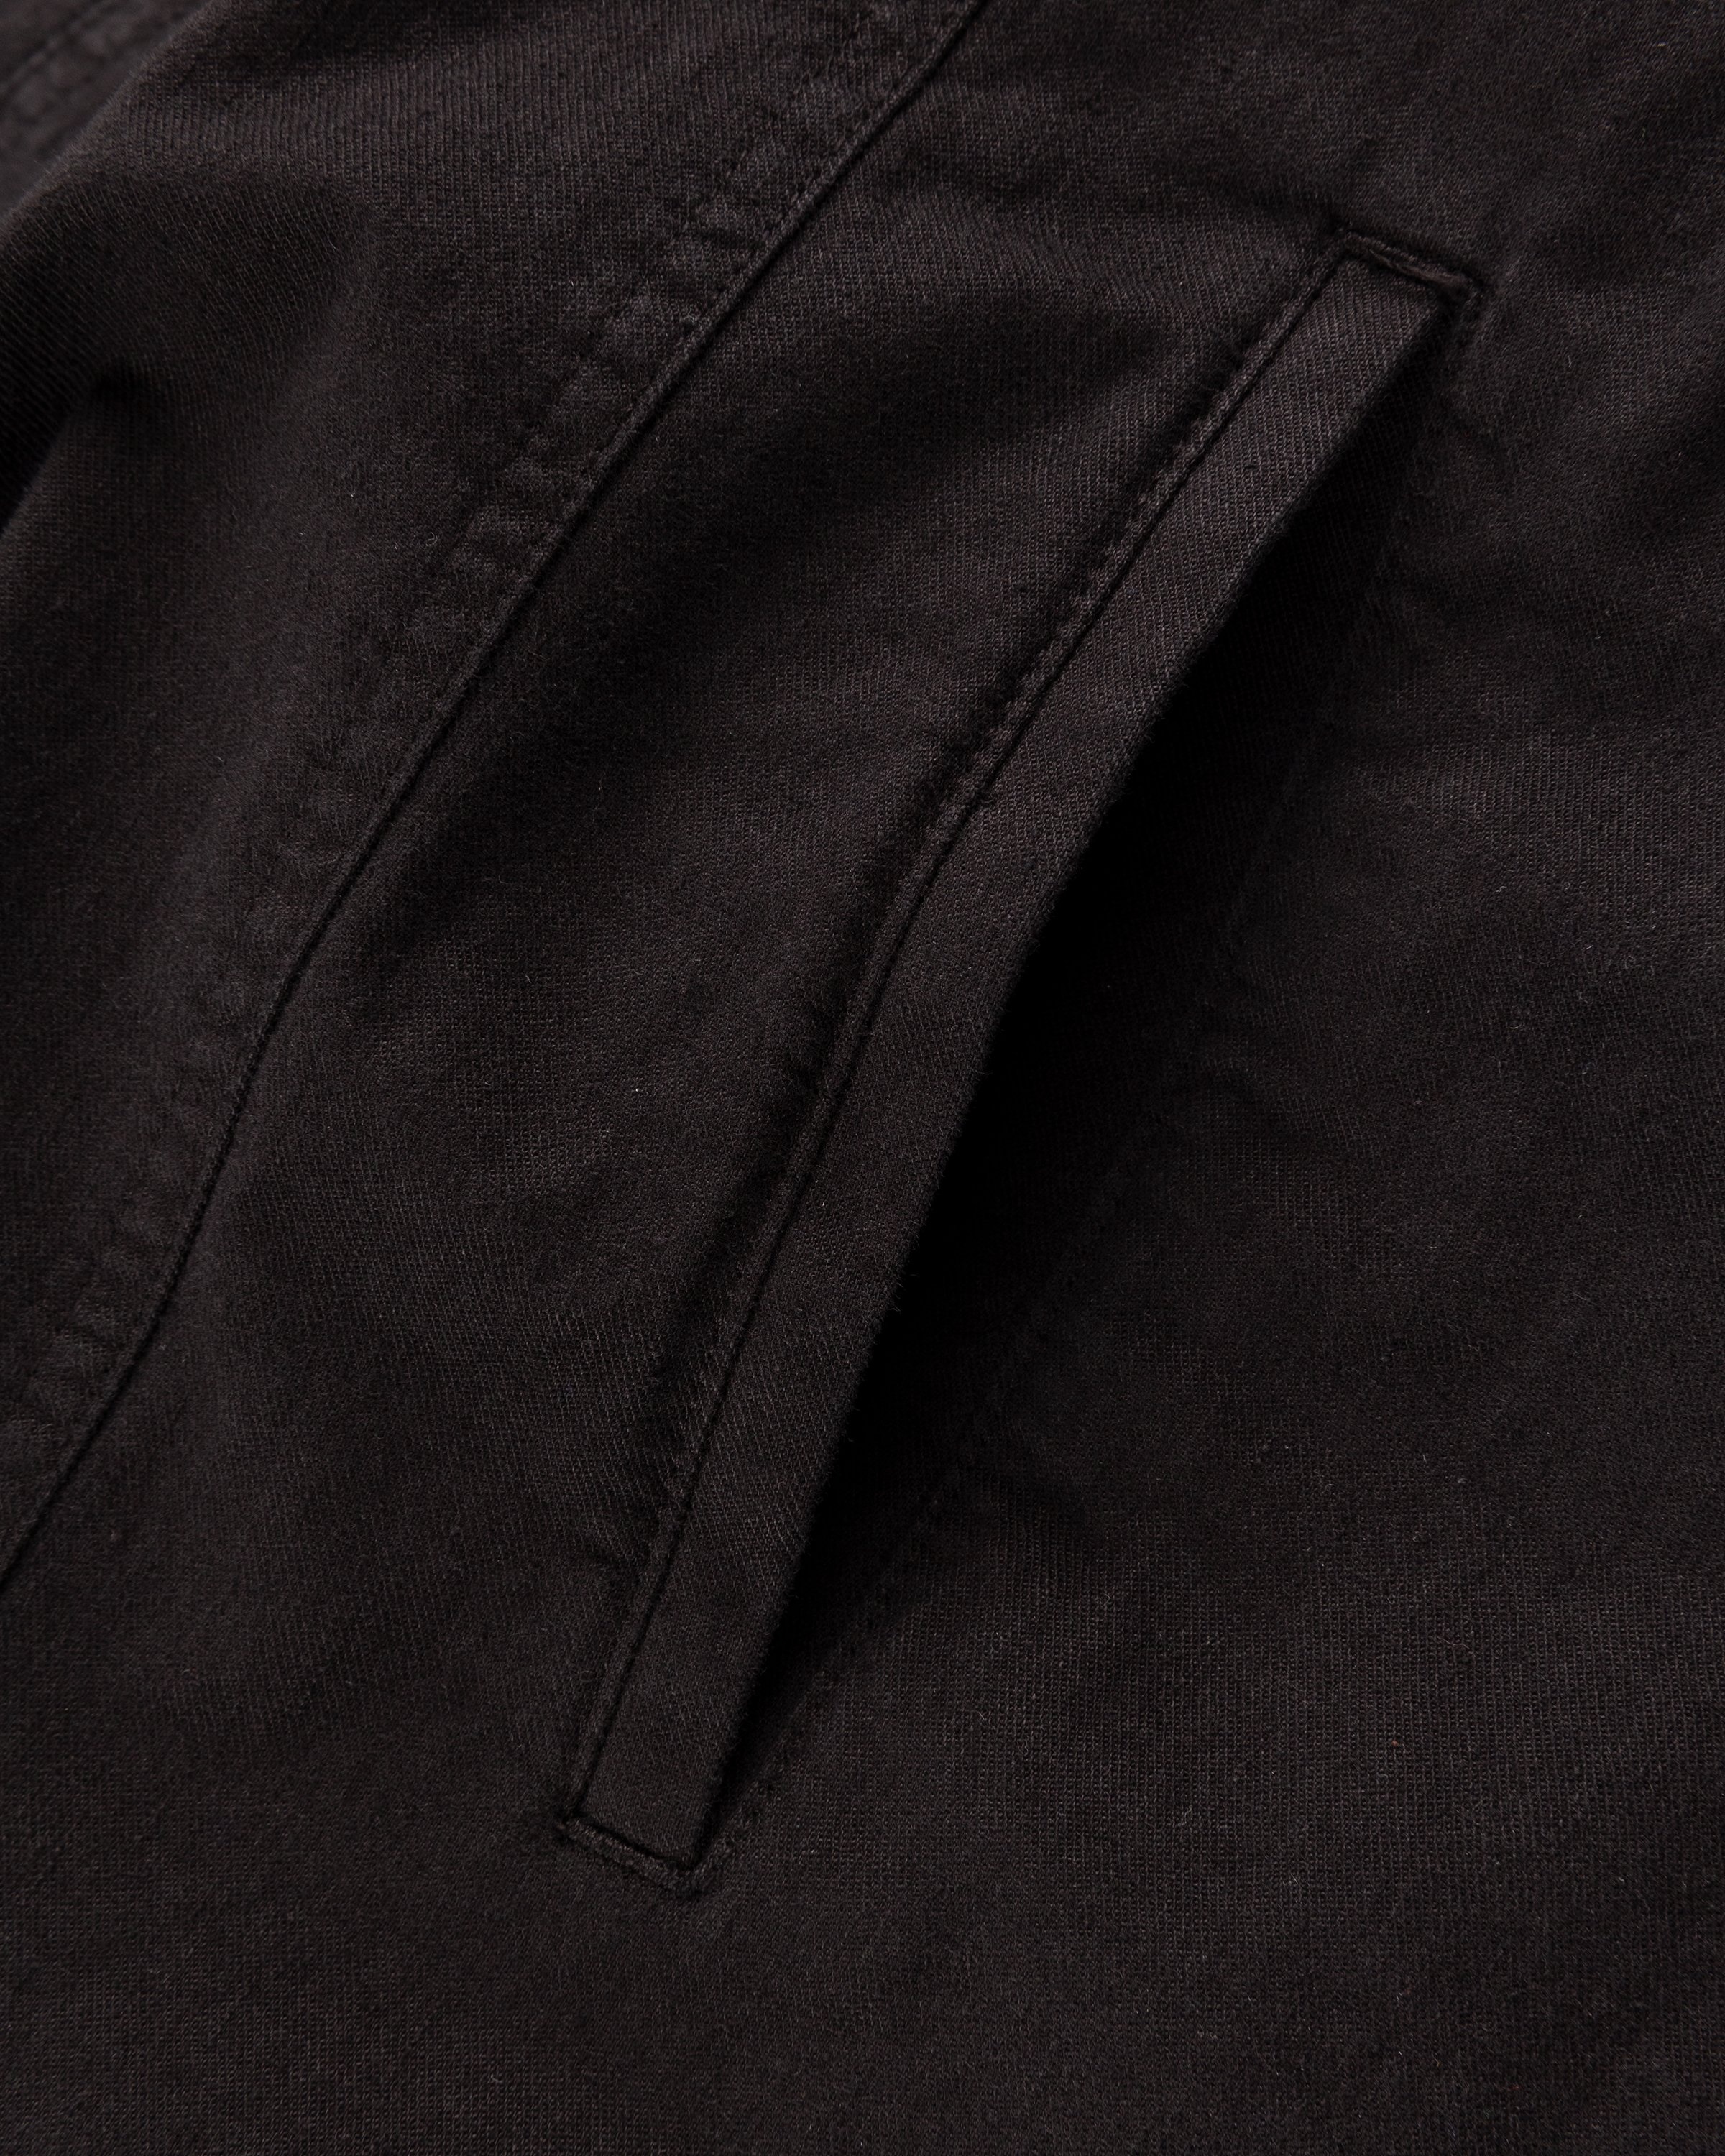 Winnie New York – Linen Cargo Shorts Black - Shorts - Black - Image 6